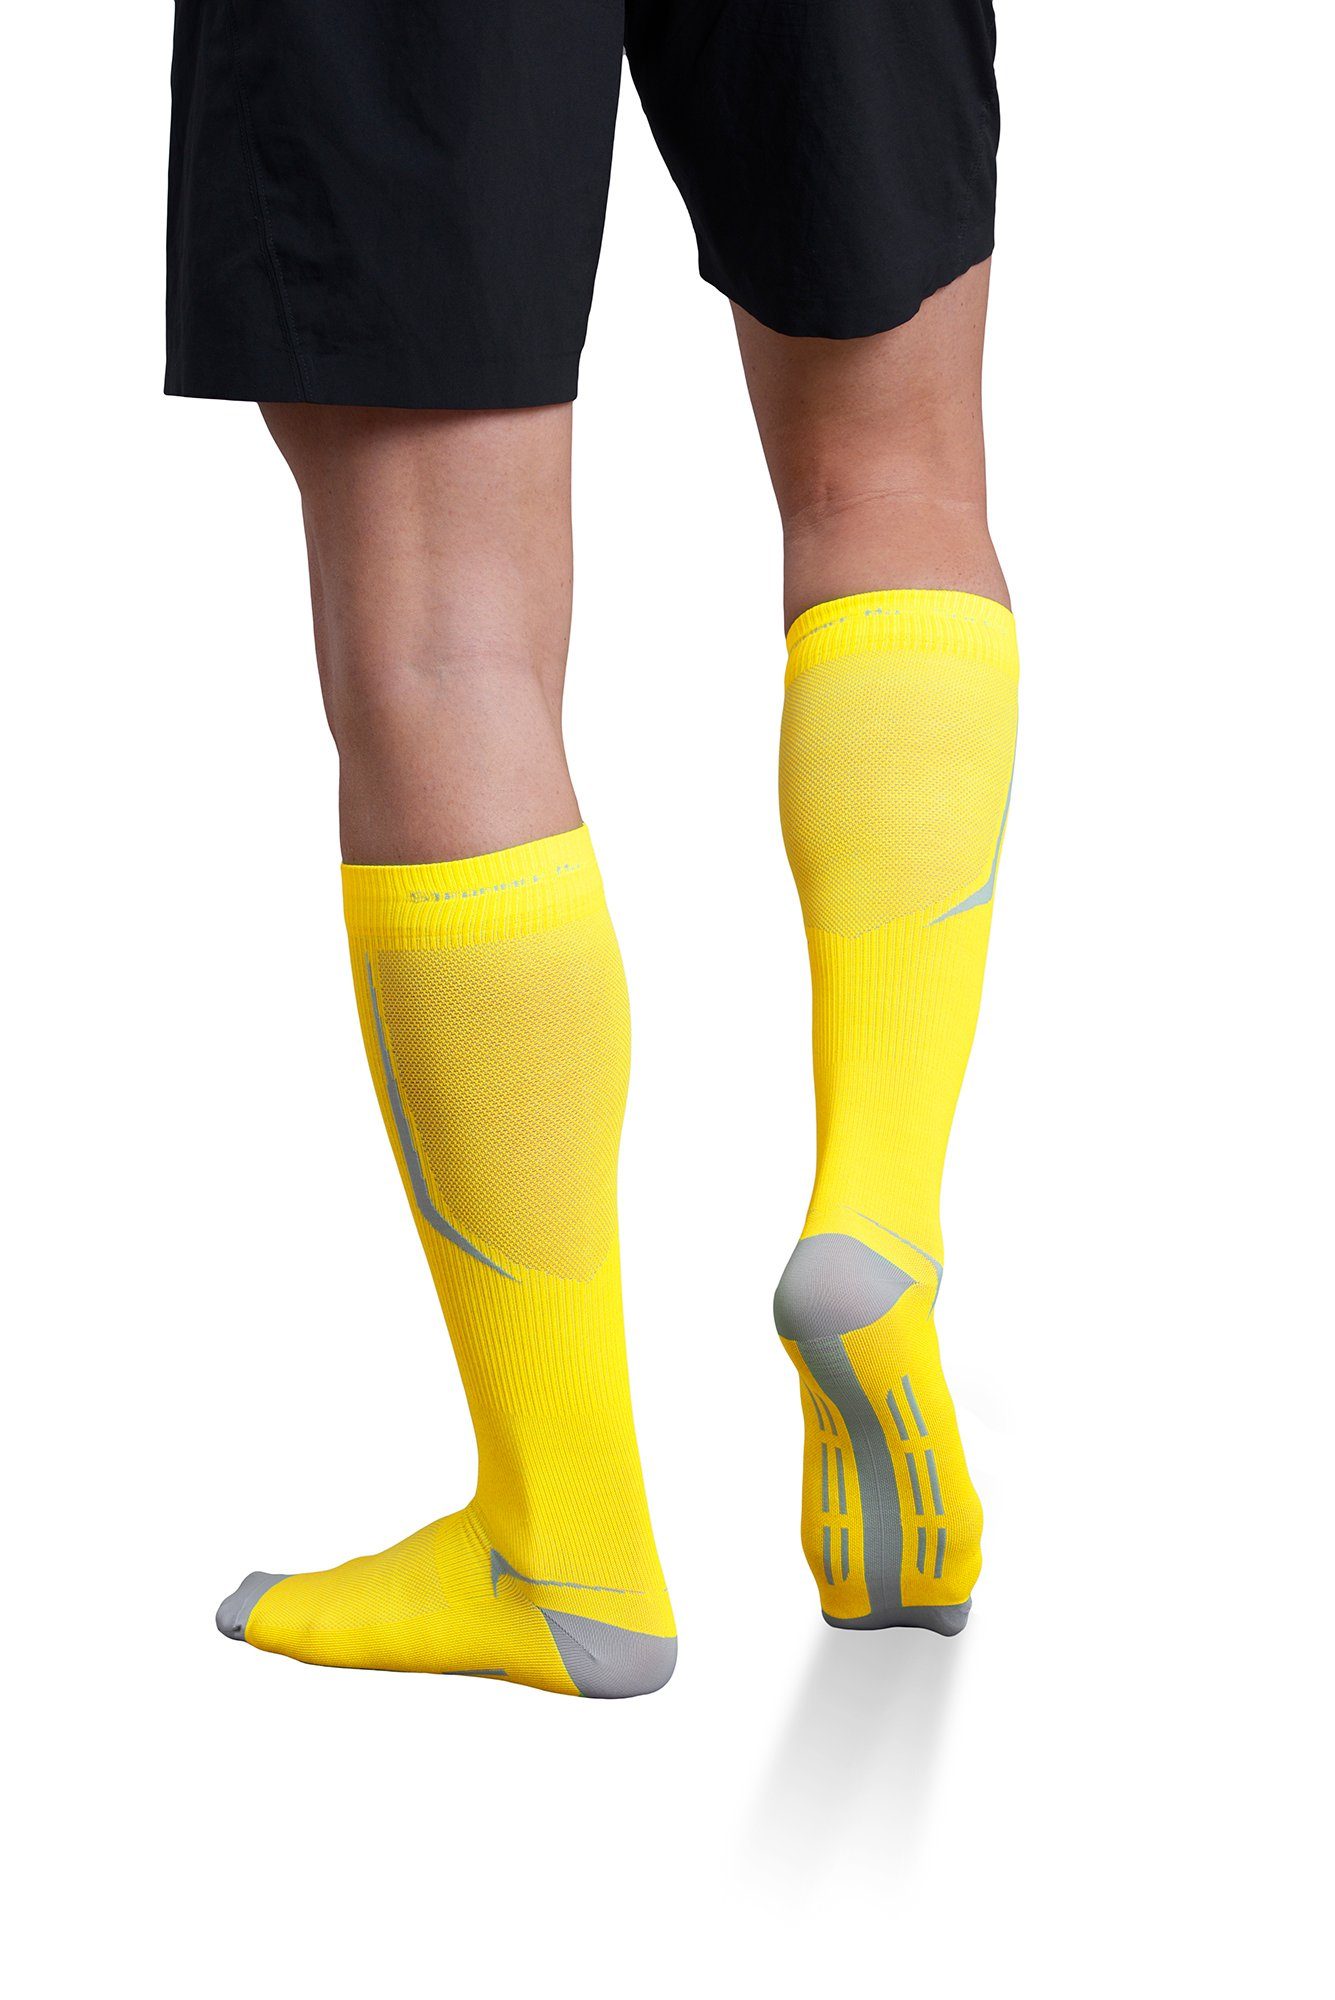 Performance® Gelb Socks Compression Performance Strammer Max Kompressionsstrümpfe atmungsaktiv, antibakteriell